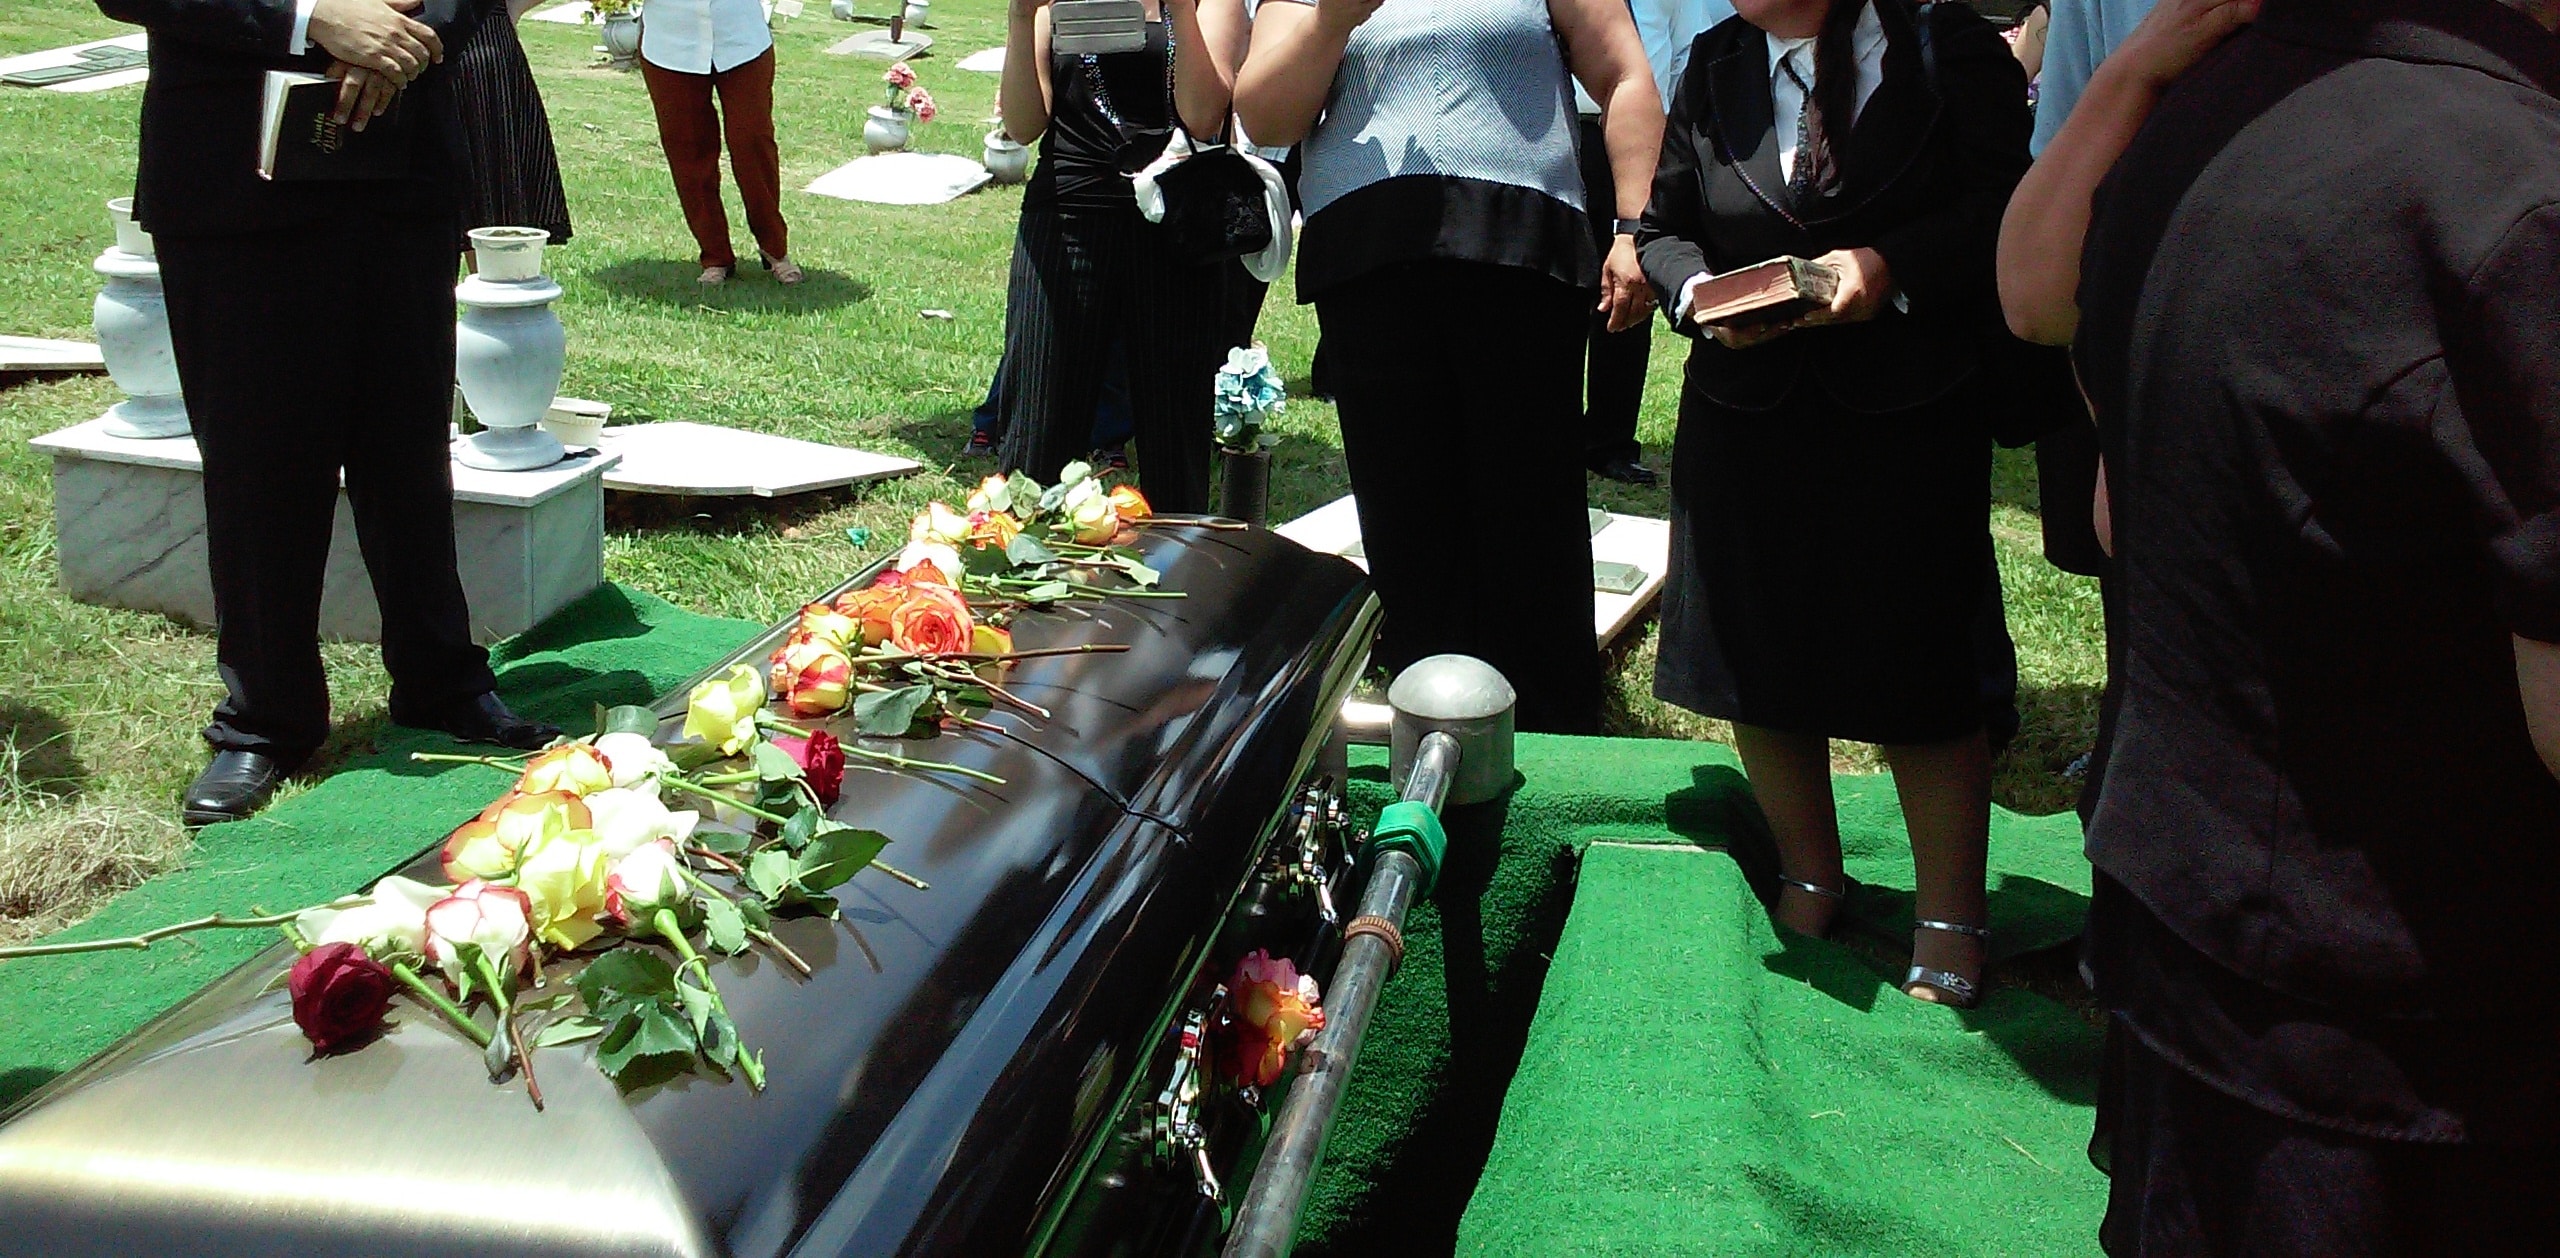 Man vindt levend begraven baby bij begrafenis eigen kind